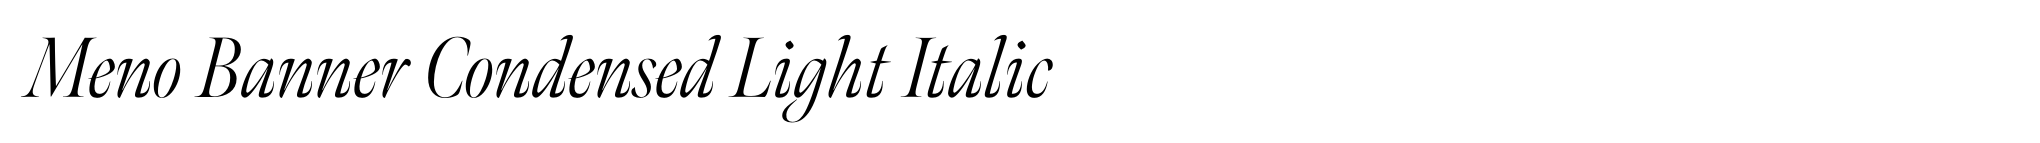 Meno Banner Condensed Light Italic image